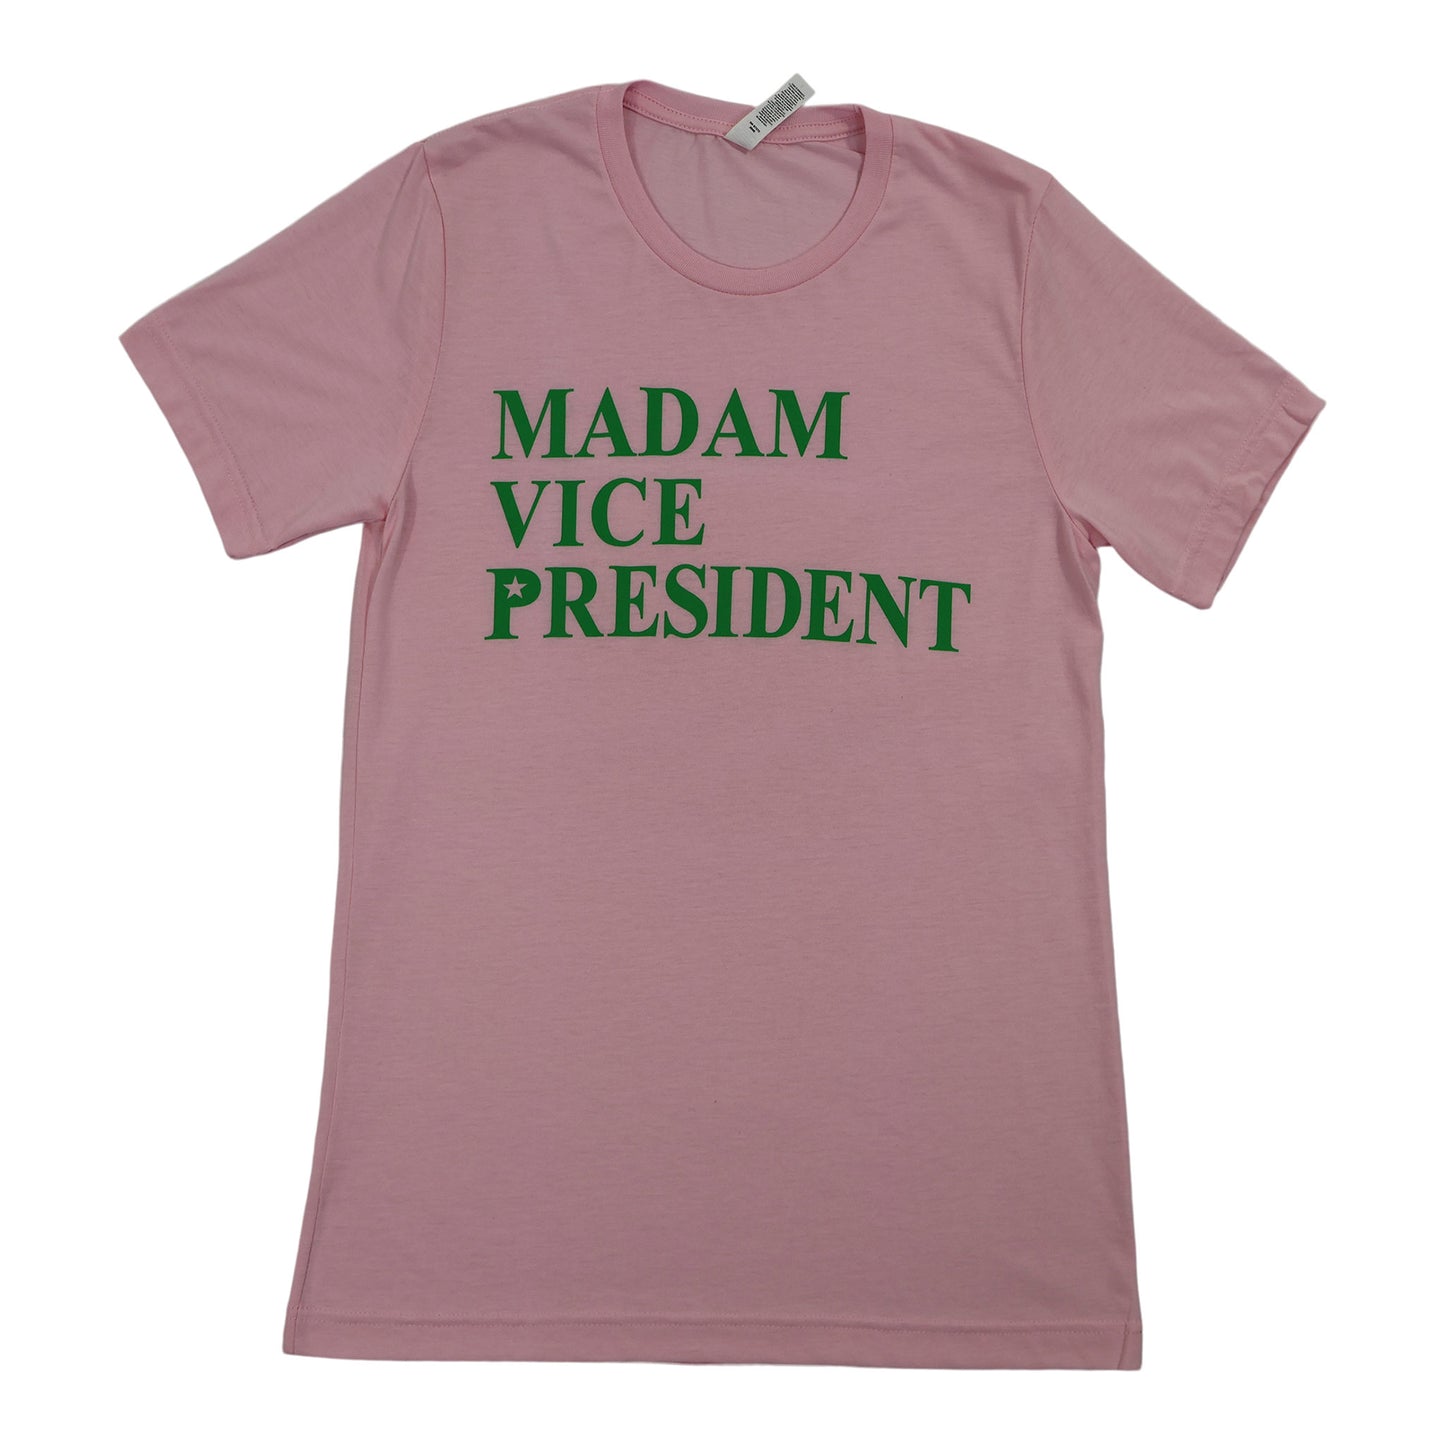 Unisex Madam Vice President T-shirt